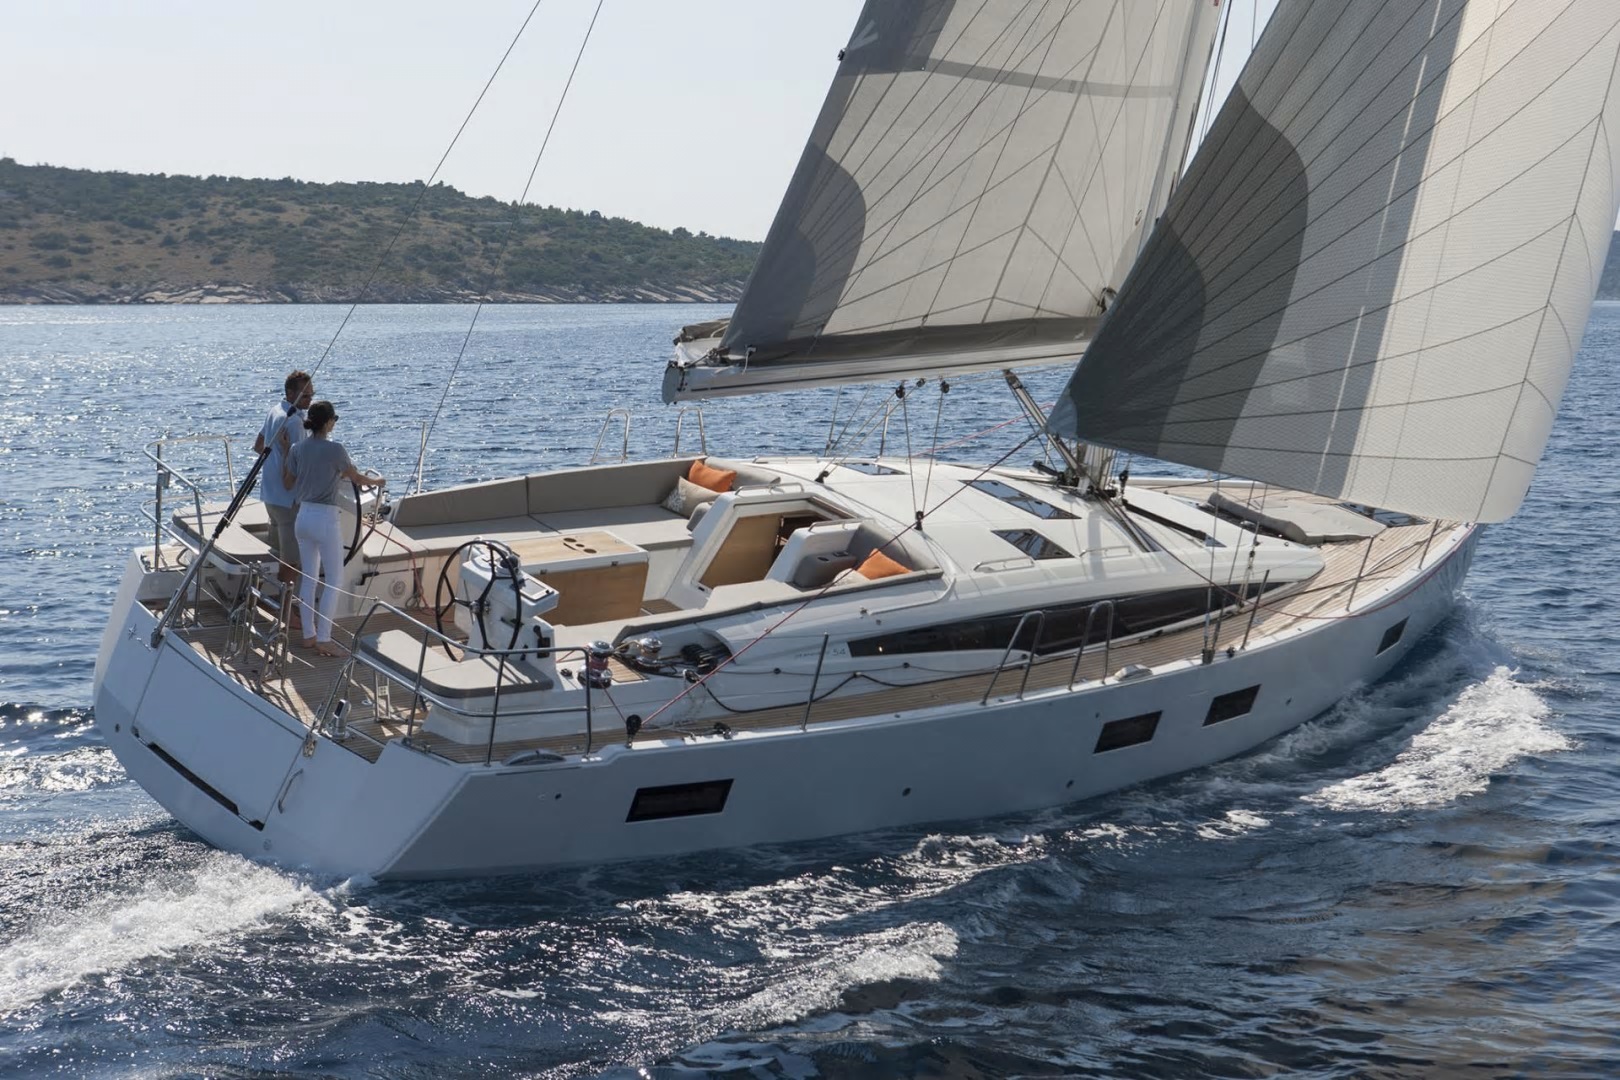 Sail boat FOR CHARTER, year 2017 brand Jeanneau and model 54, available in Real Club Náutico de Palma Palma Mallorca España